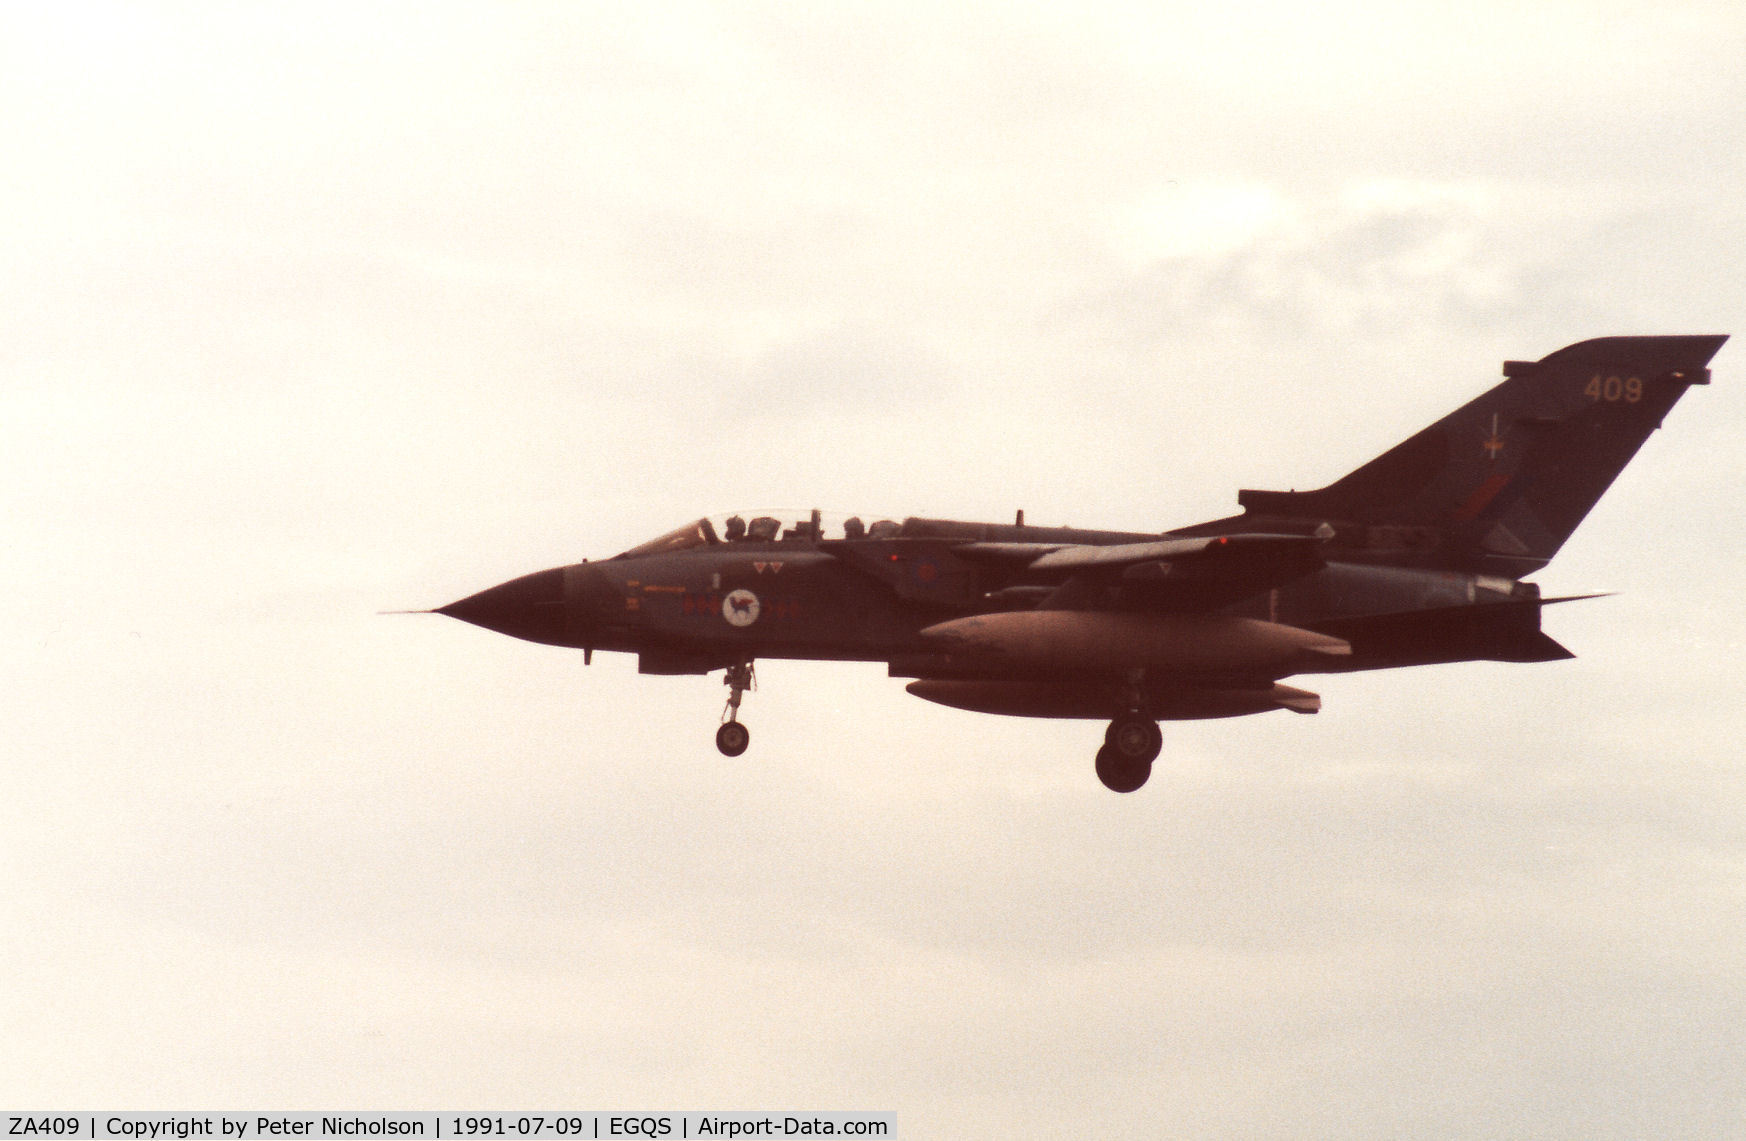 ZA409, 1983 Panavia Tornado GR.1 C/N 224/BT033/3108, Tornado GR.1, callsign Magnum 3, of the Tactical Weapons Conversion Unit at RAF Honington landing at RAF Lossiemouth in the Summer of 1991.